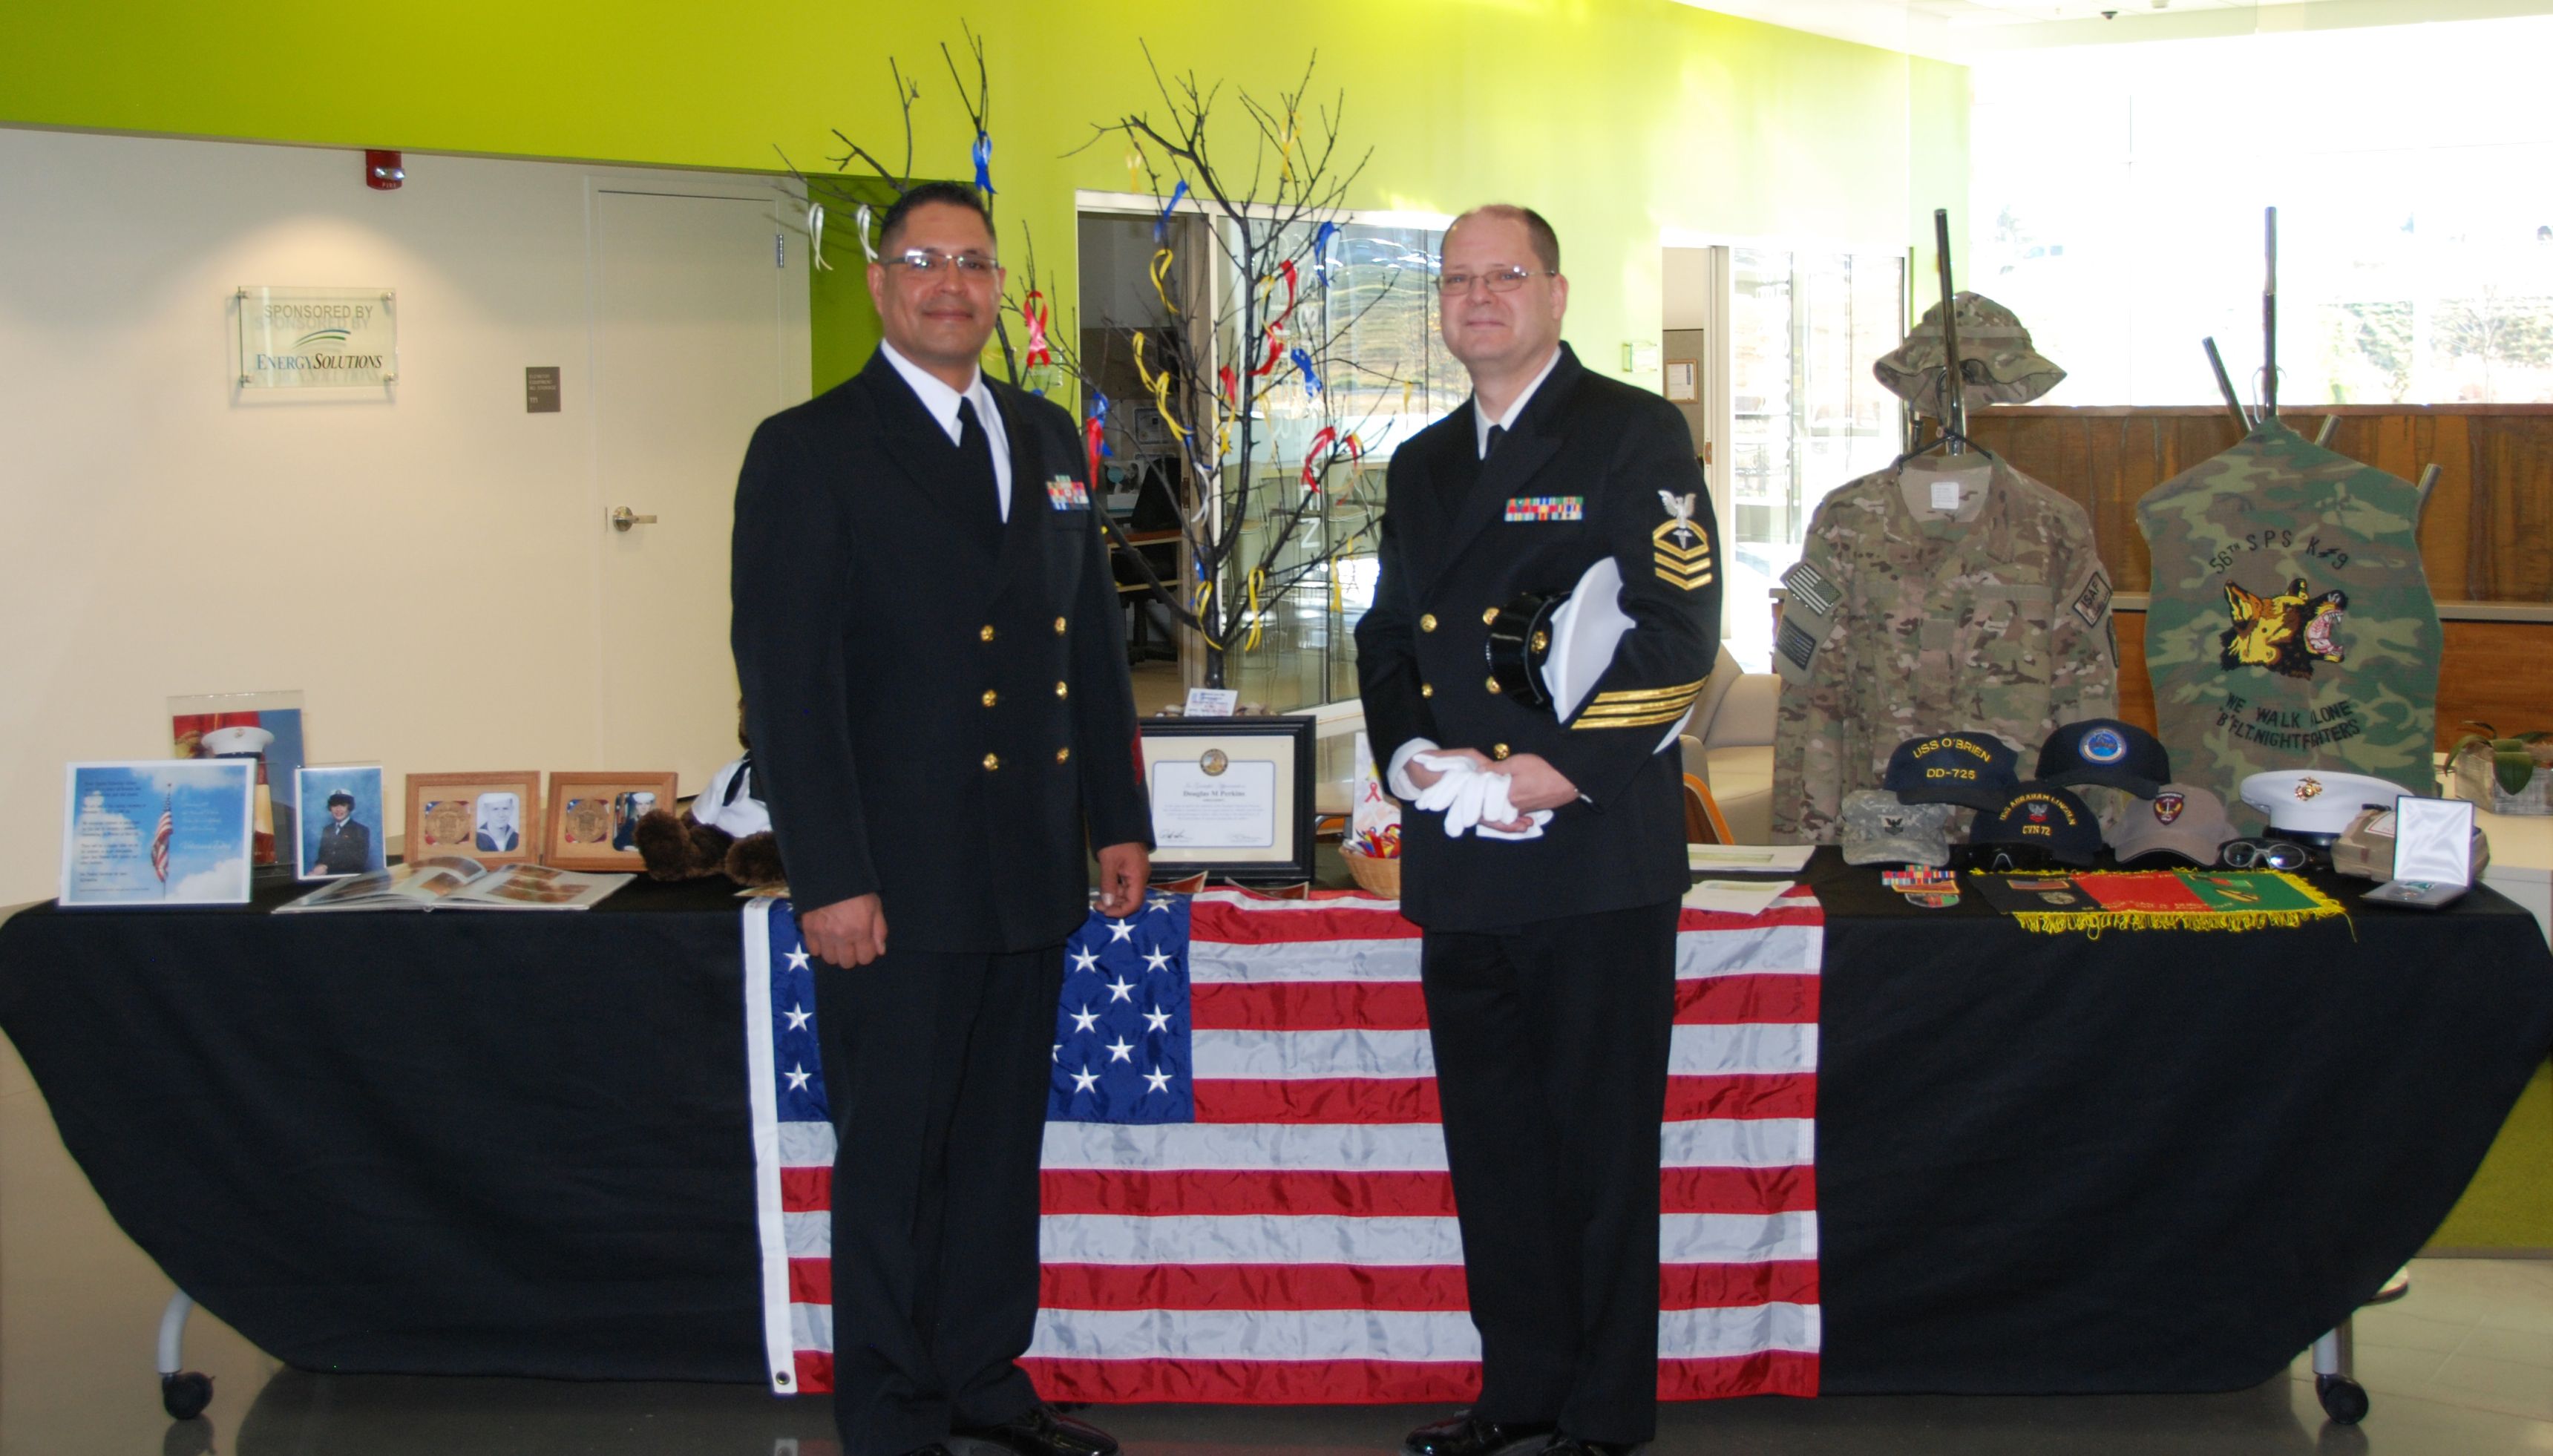 ITC Joe Mena and HMC Ralph Pittman, Veteran鈥檚 Day 2013